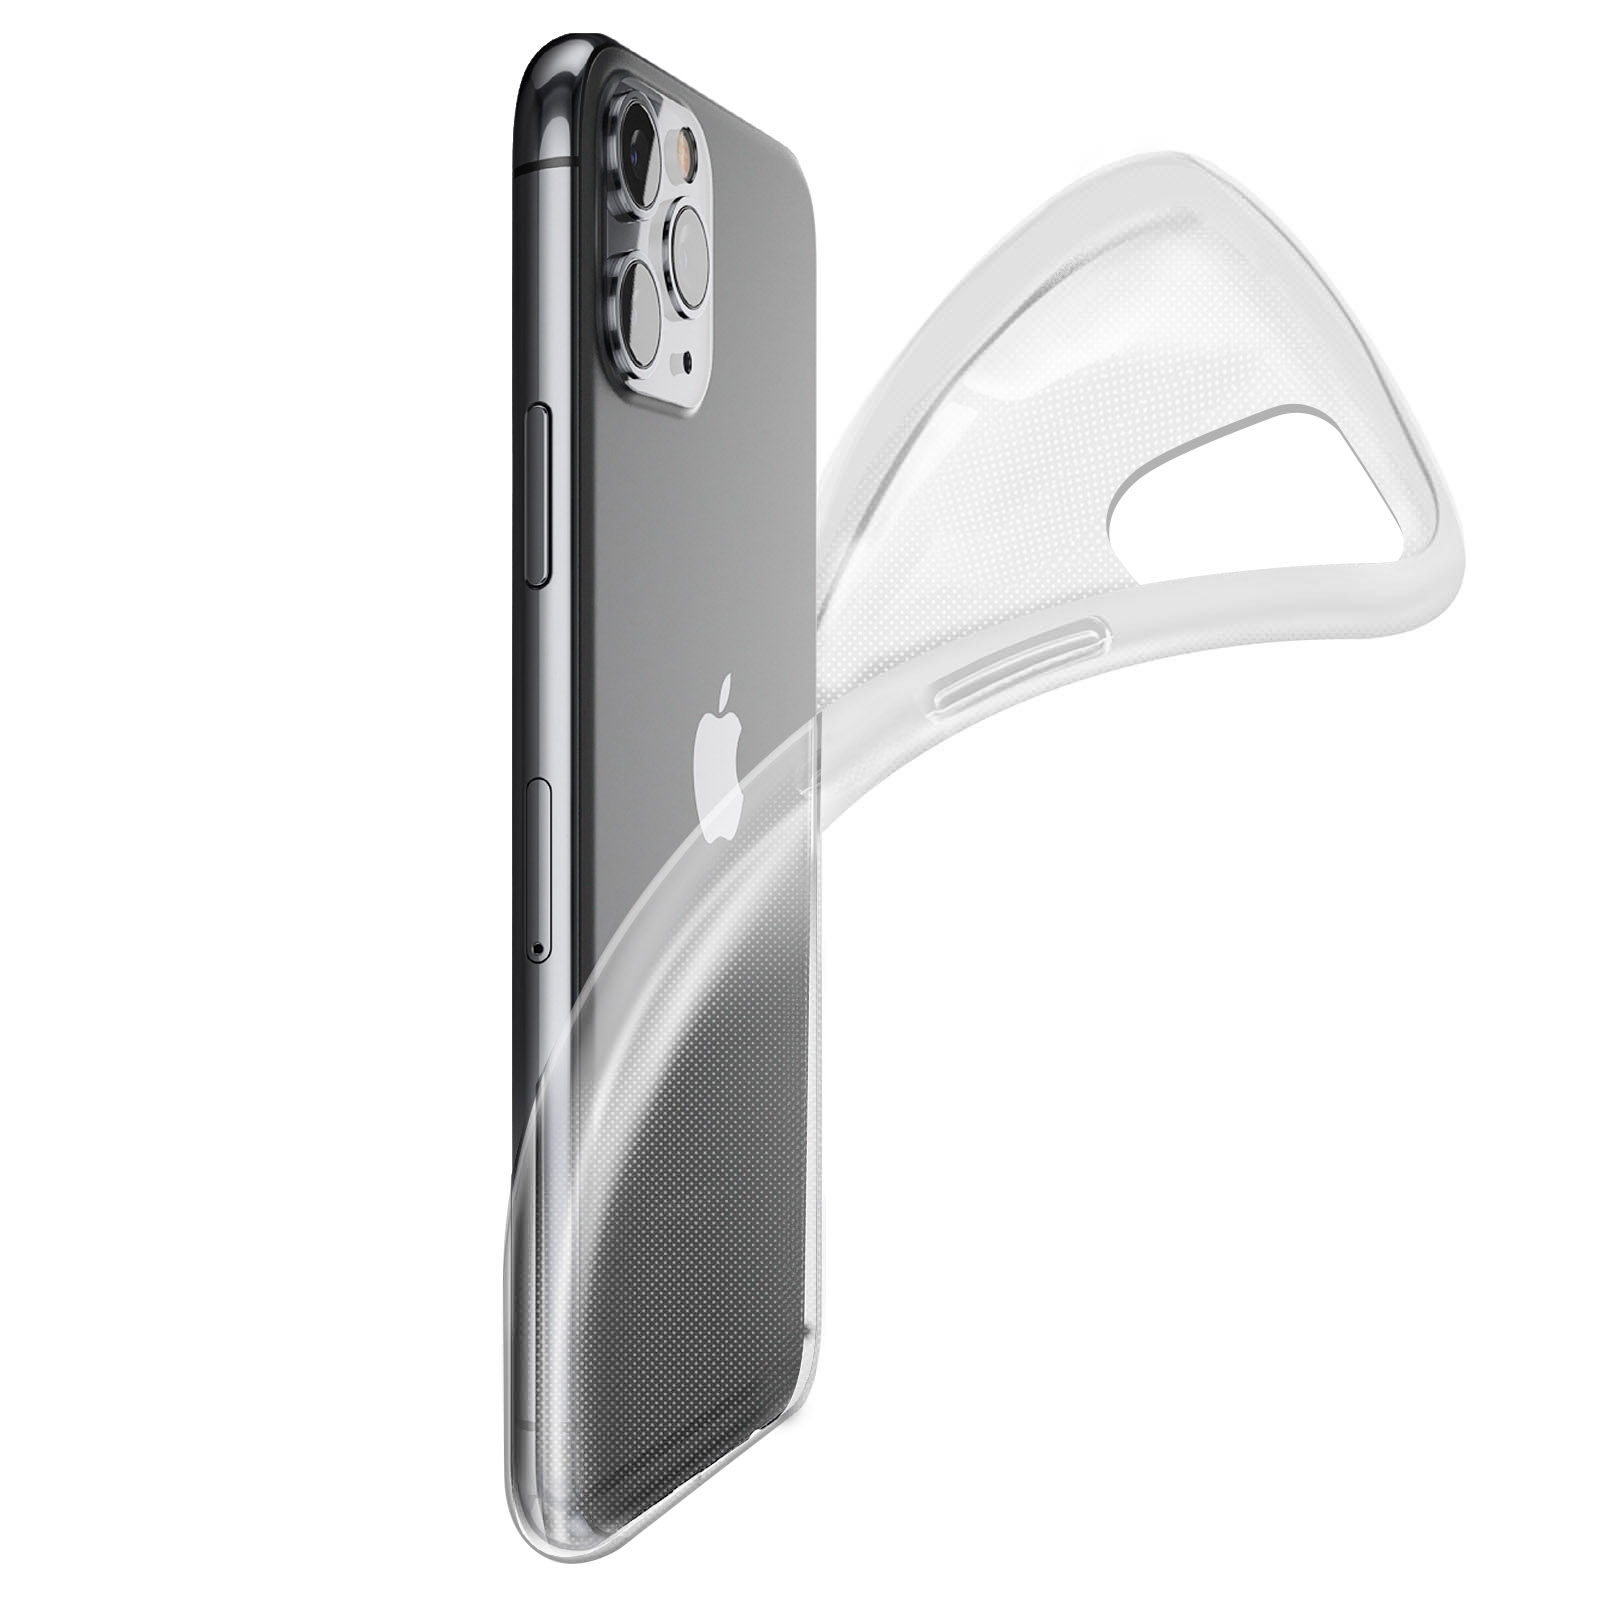 NEW'C Coque pour iPhone 11 Ultra Transparente Silicone en Gel TPU